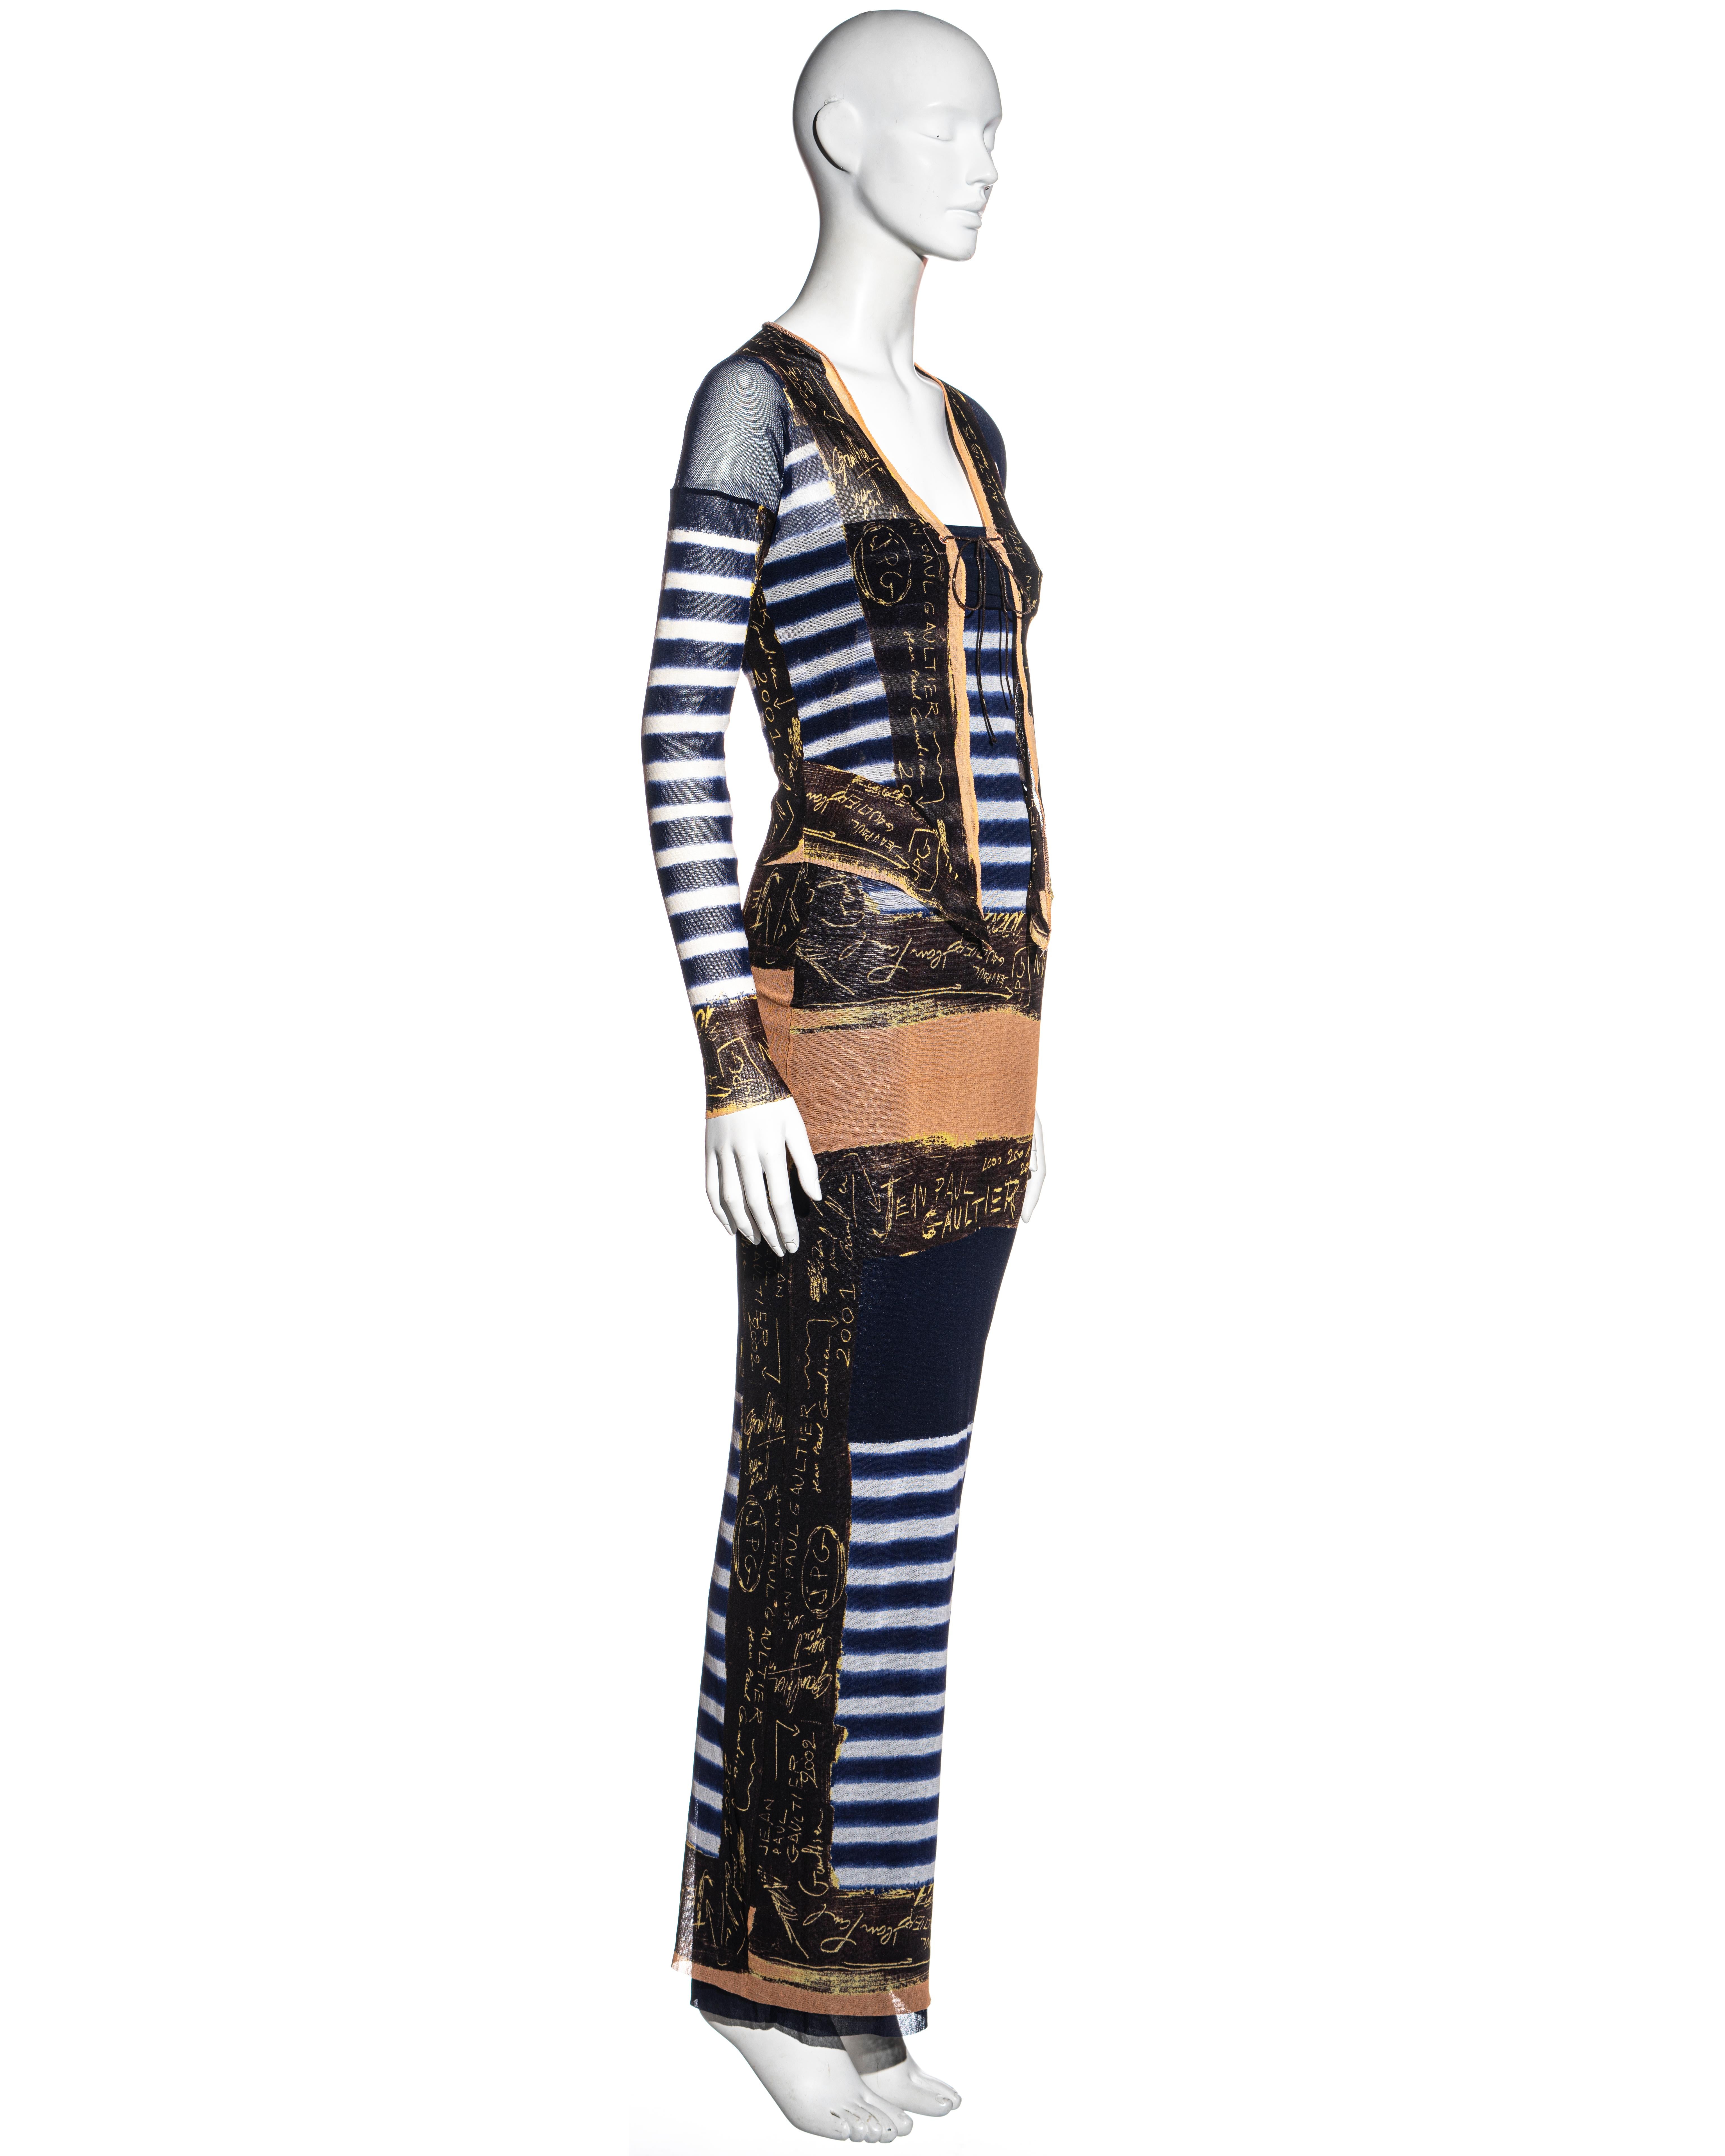 Black Jean Paul Gaultier navy striped nylon mesh tube dress and cardigan set, c. 2001